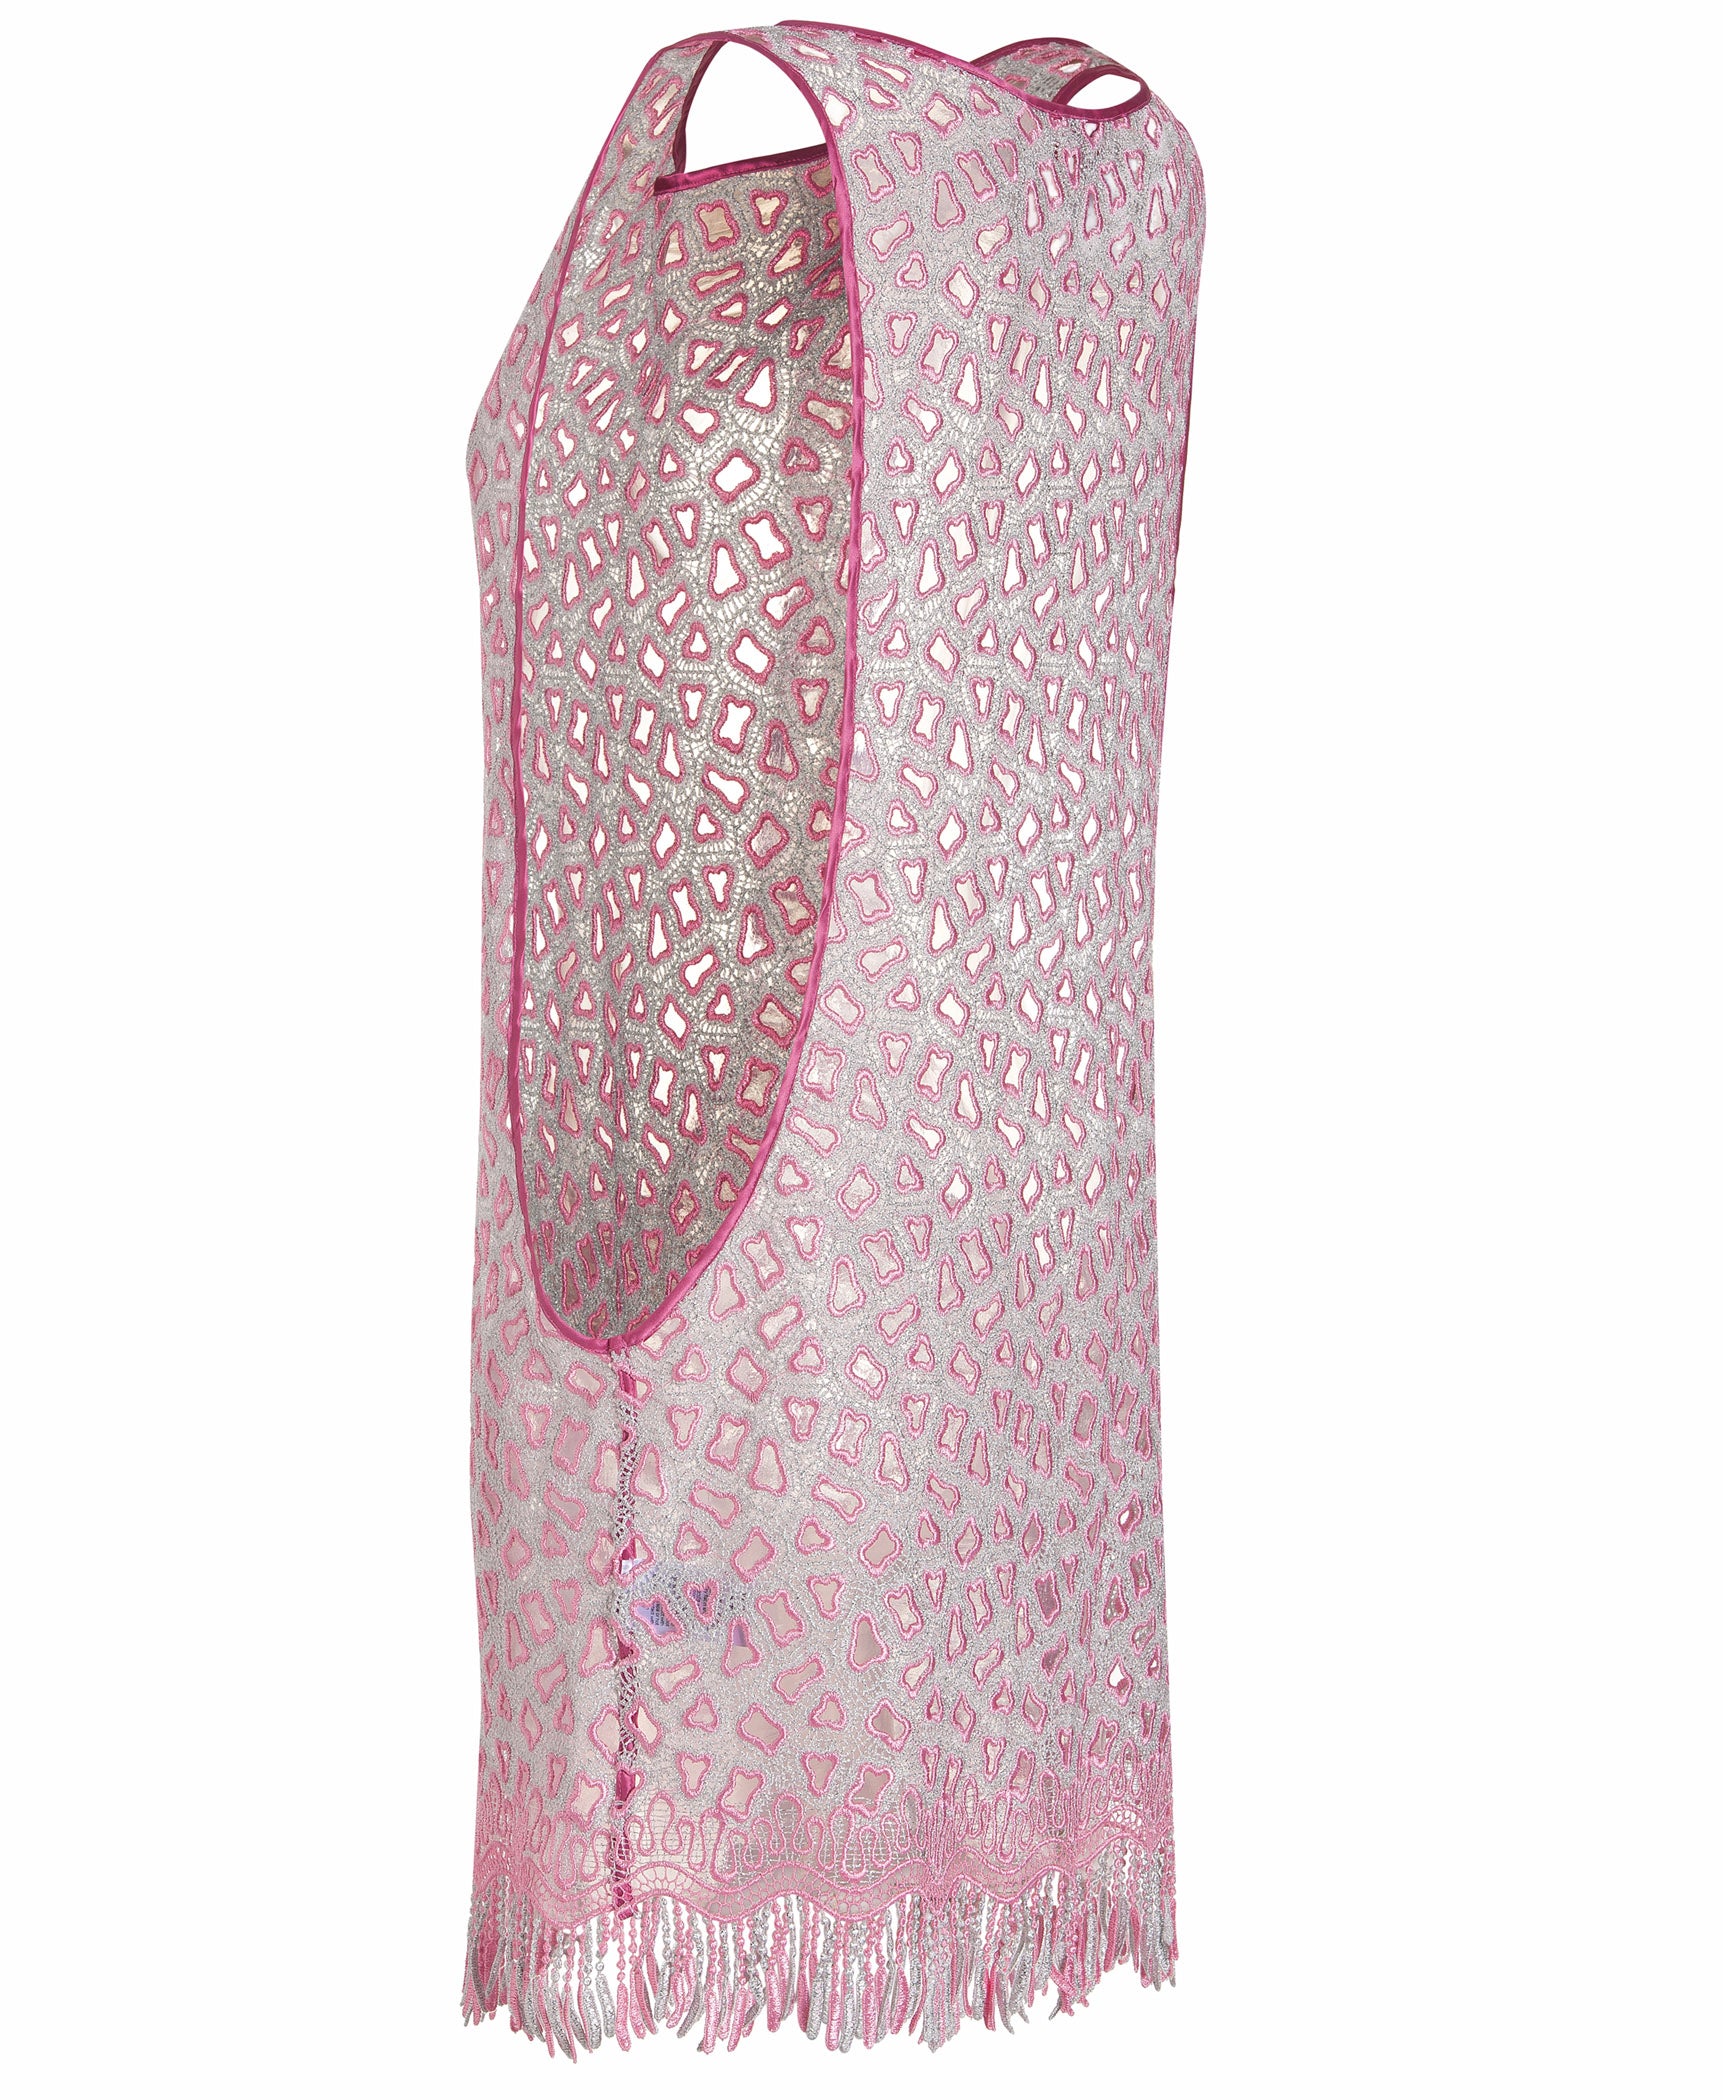 Eniqua - Pink Leo Dress Beach Dress